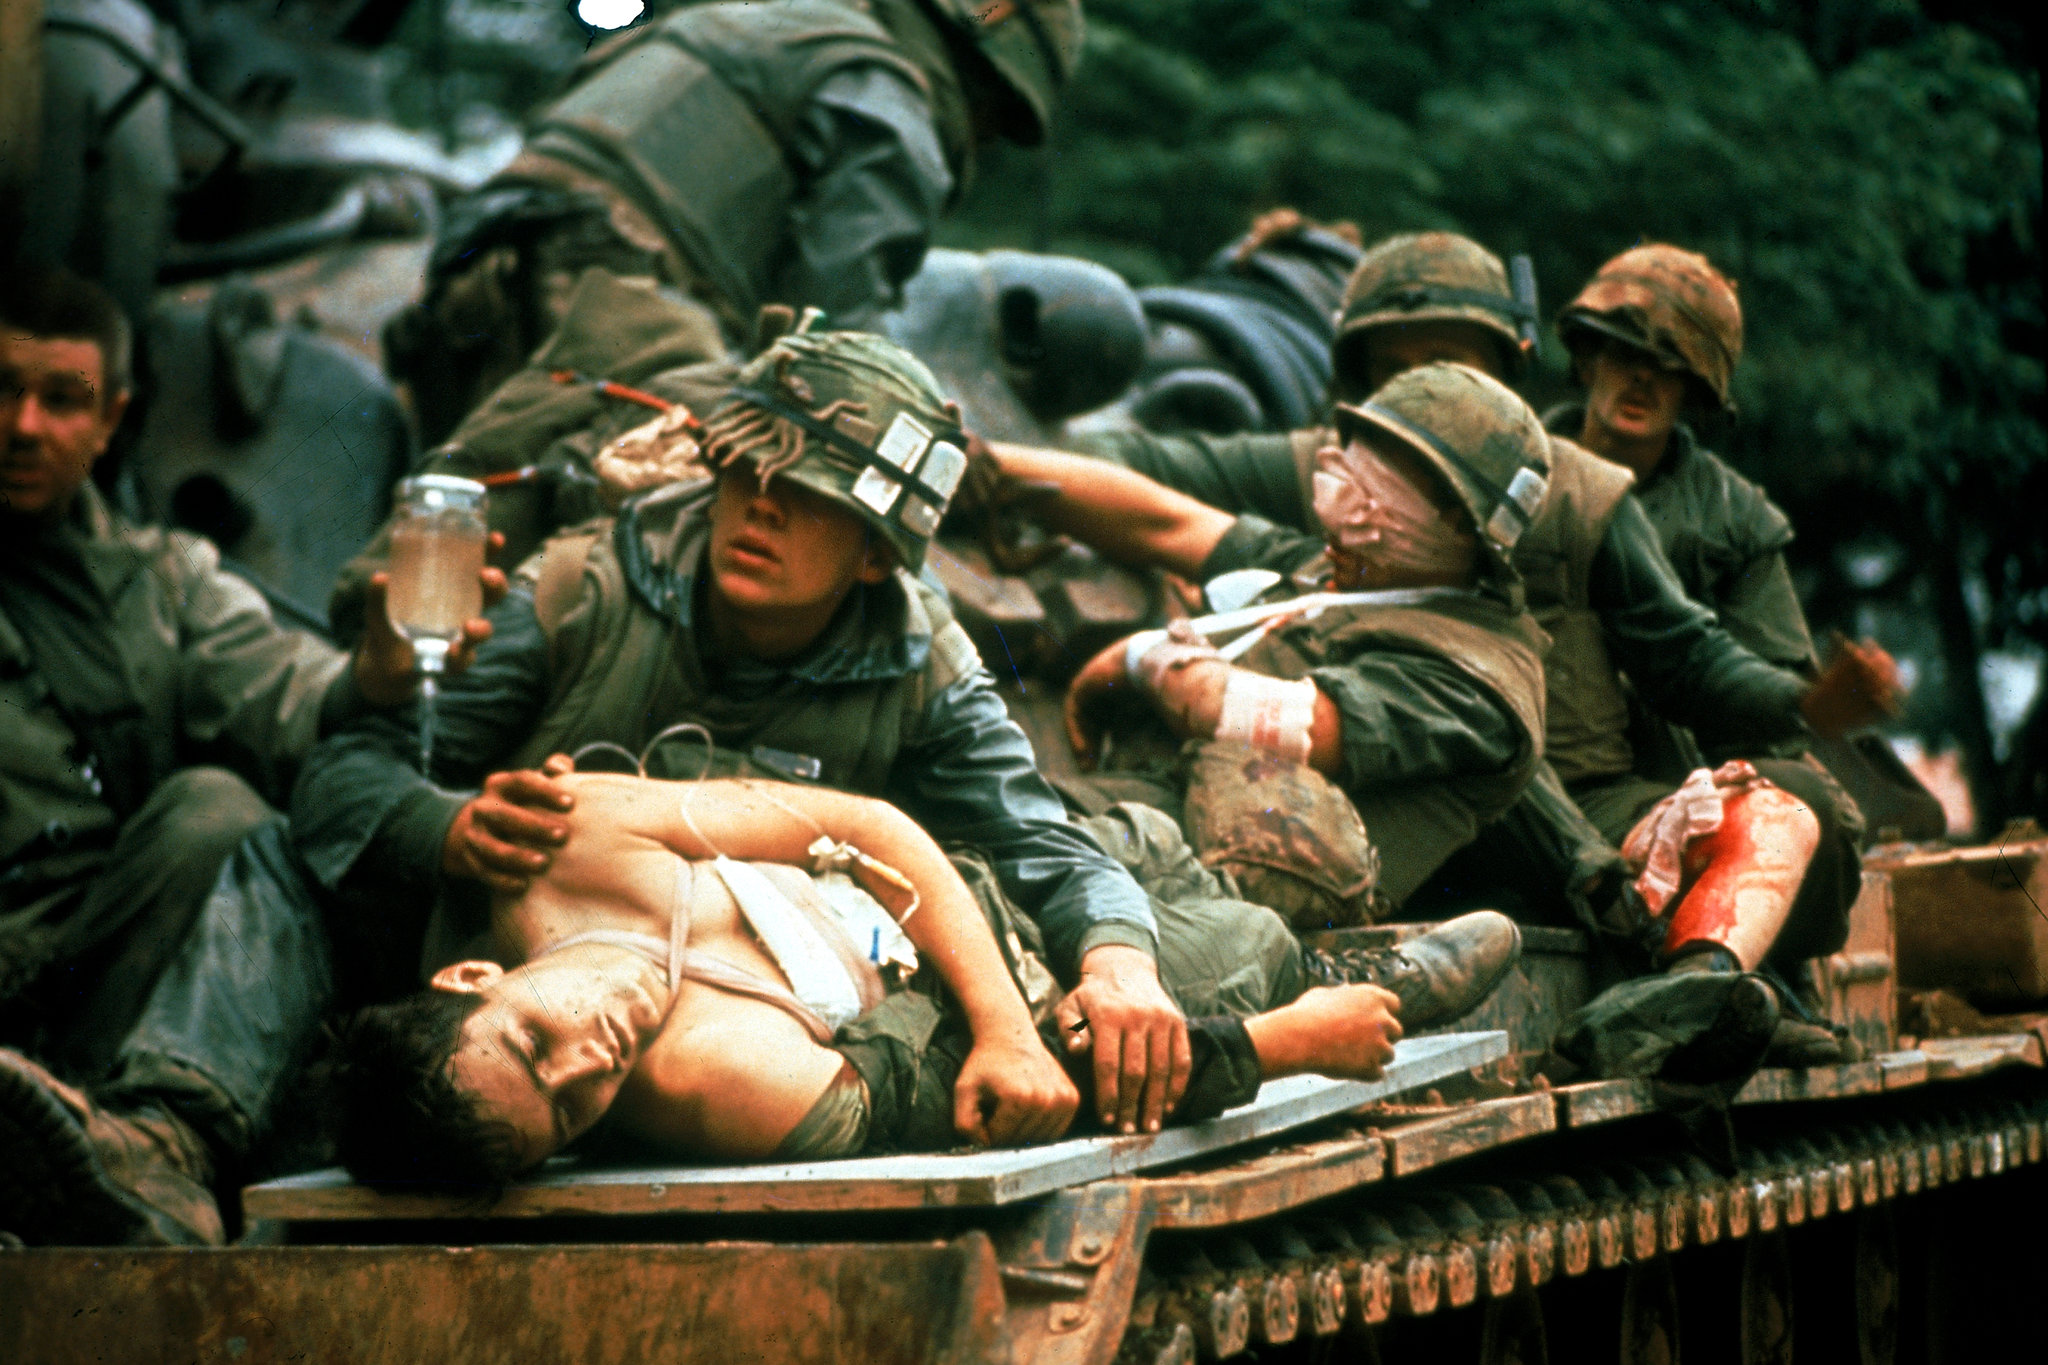 An iconic photo during Vietnam War